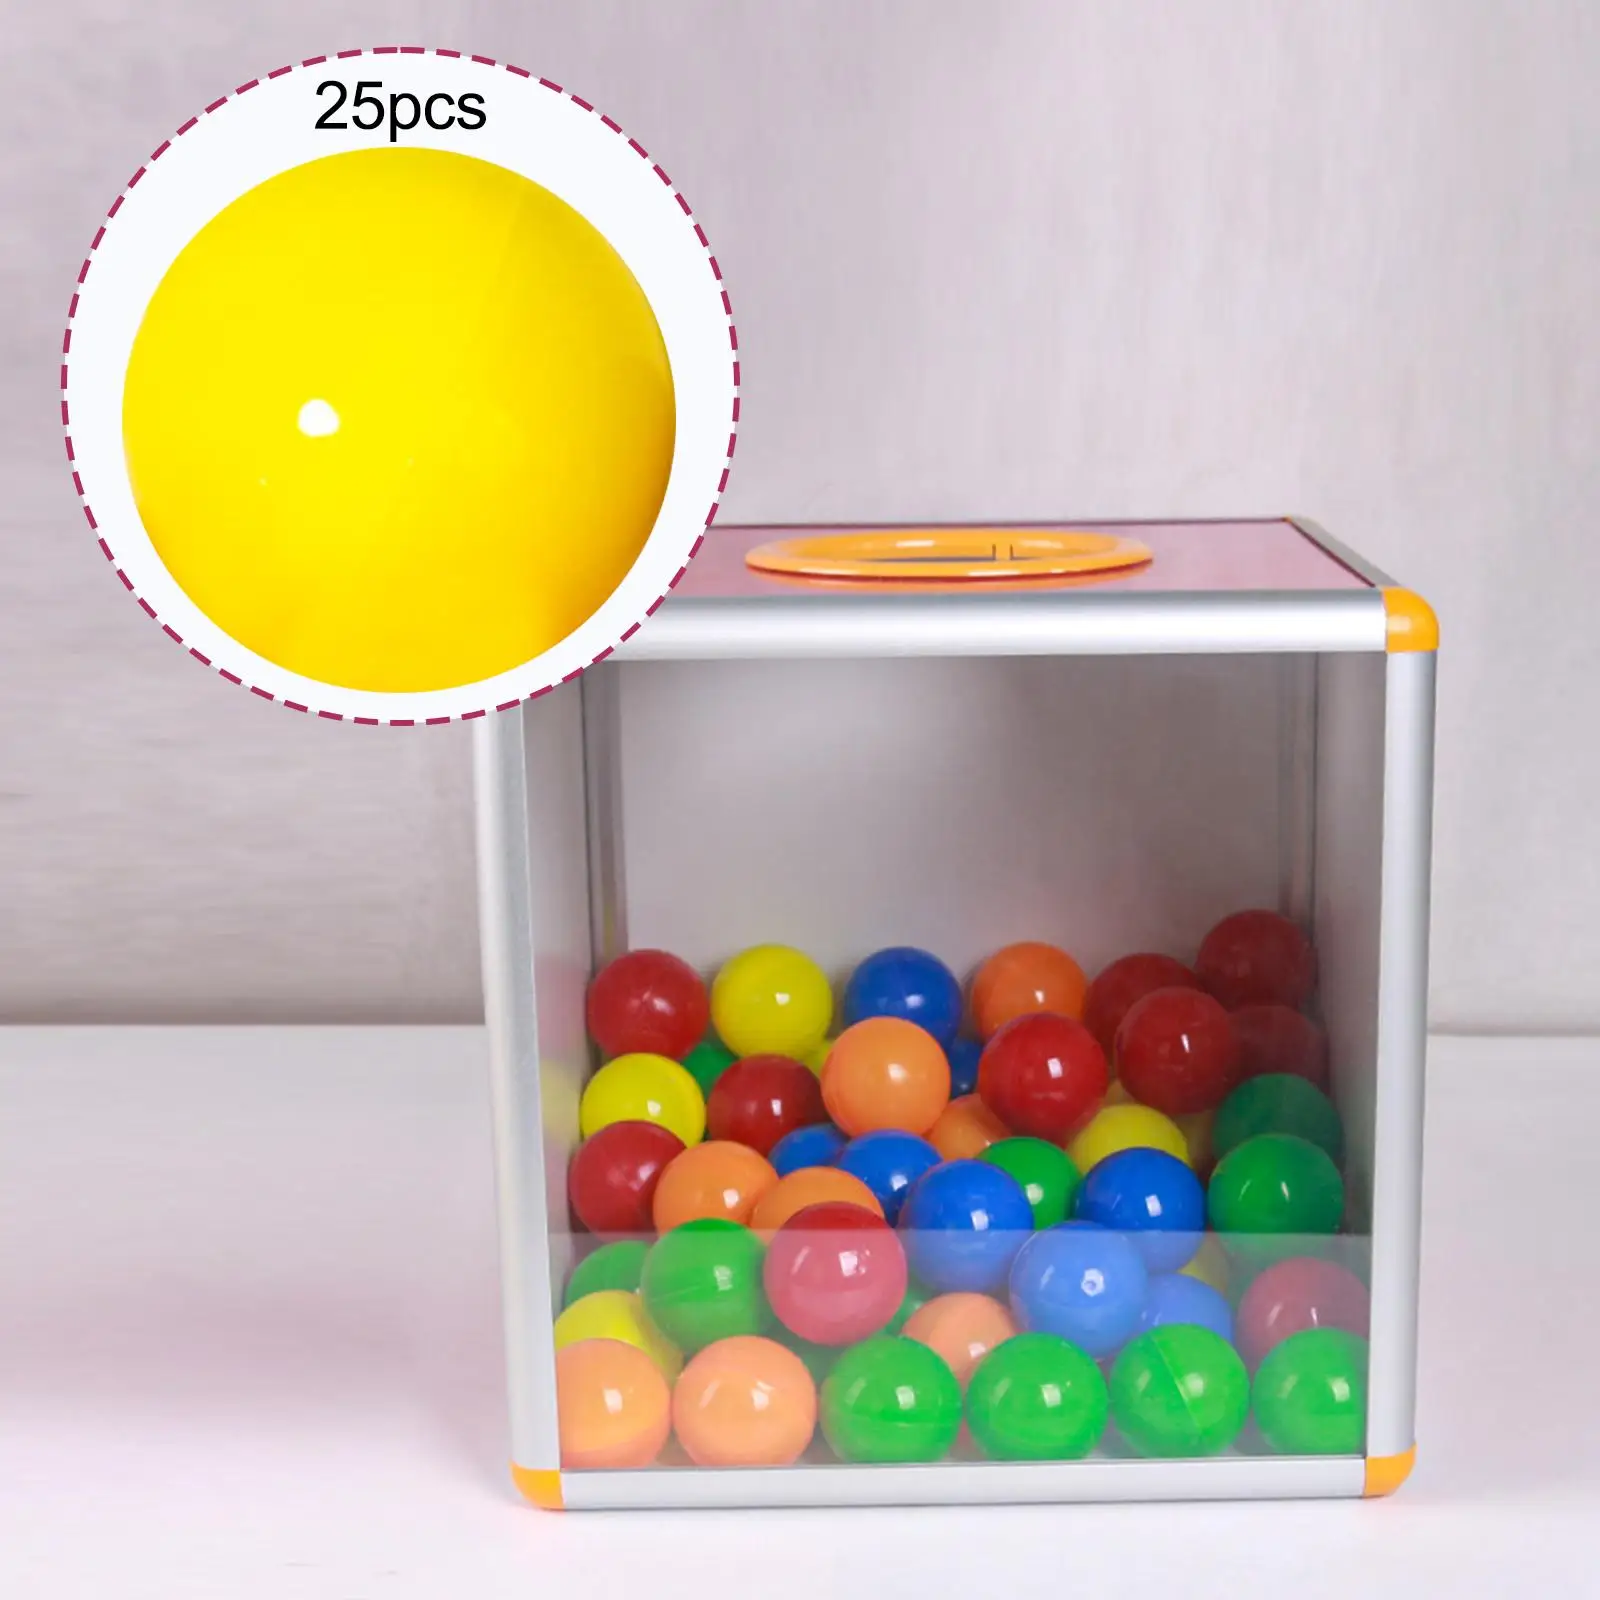 25pcs Bingo Balls Balls Replacement Parts Portable Devices Universal Raffle